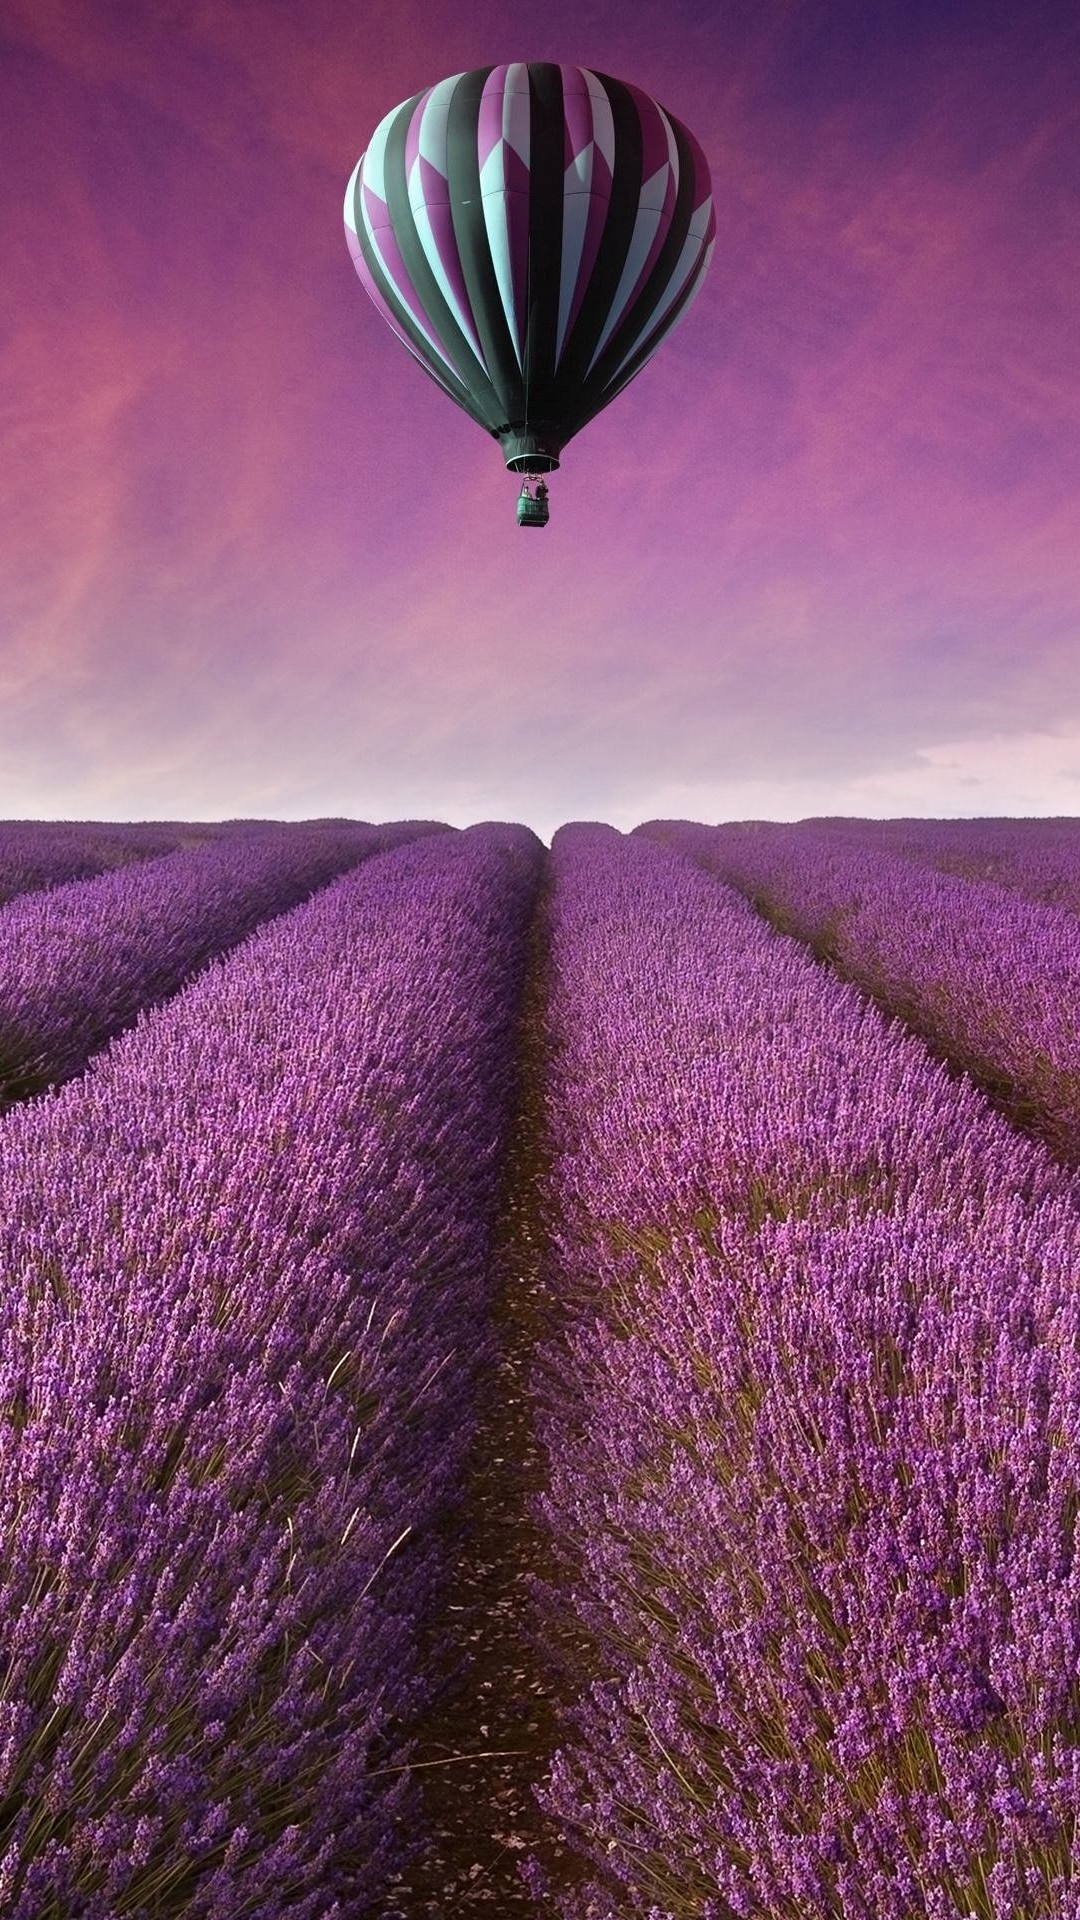 Hot Air Balloon Over Lavender Field Wallpaper for Google Nexus 5